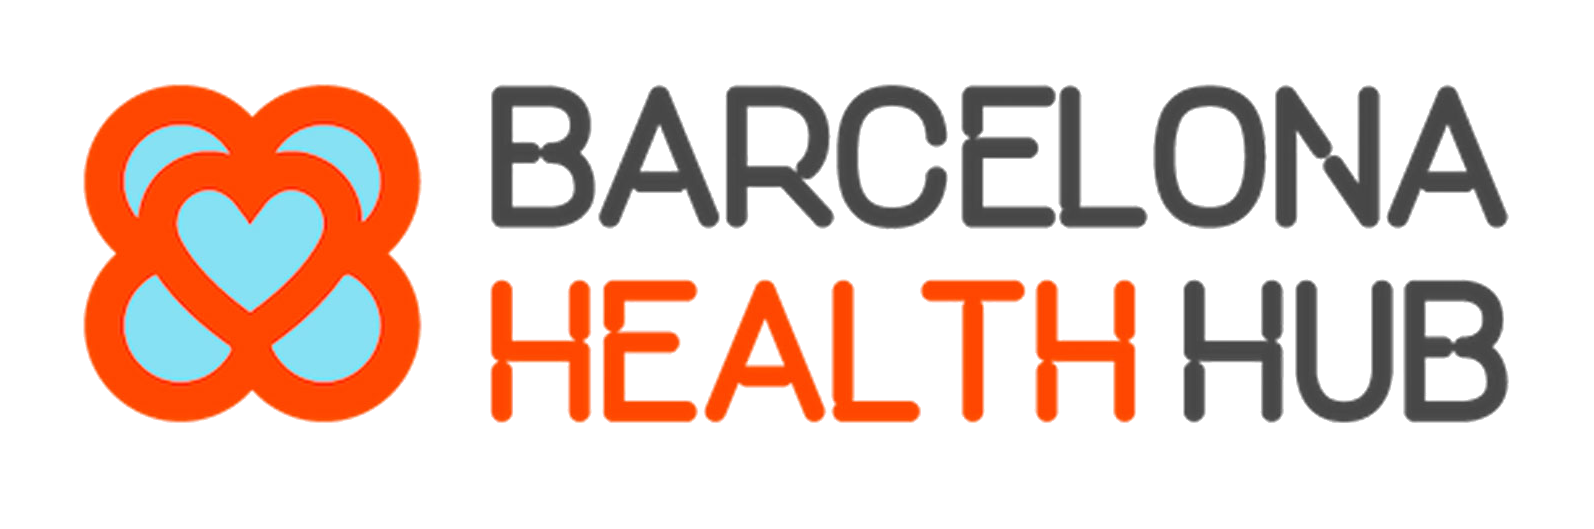 Barcelona Health Hub